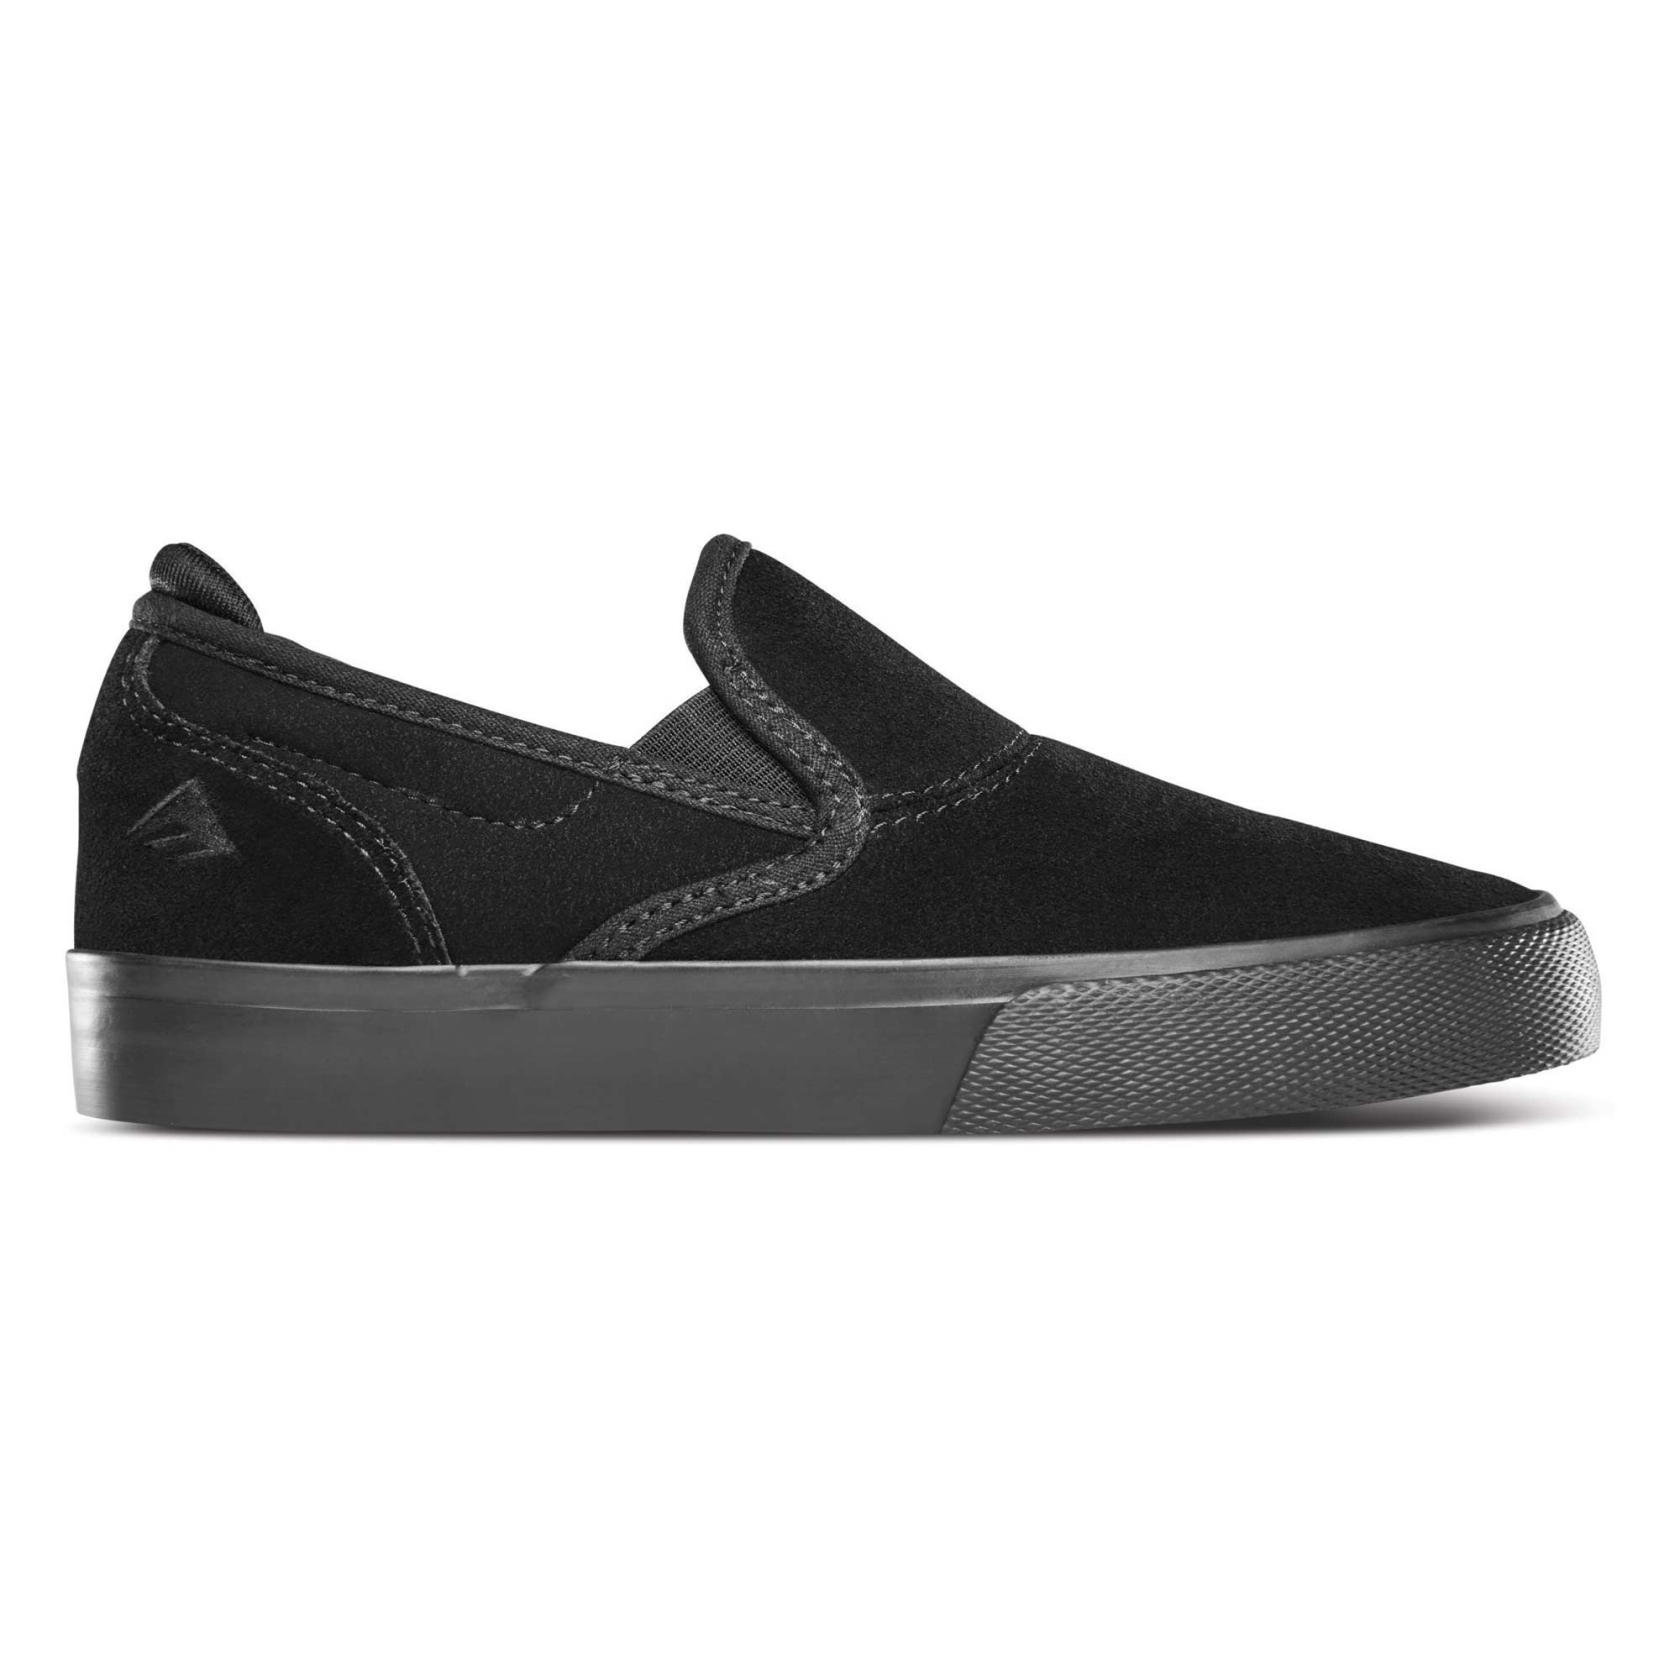 EMERICA Youths Shoe WINO G6 SLIP-ON bla/bla, black/black